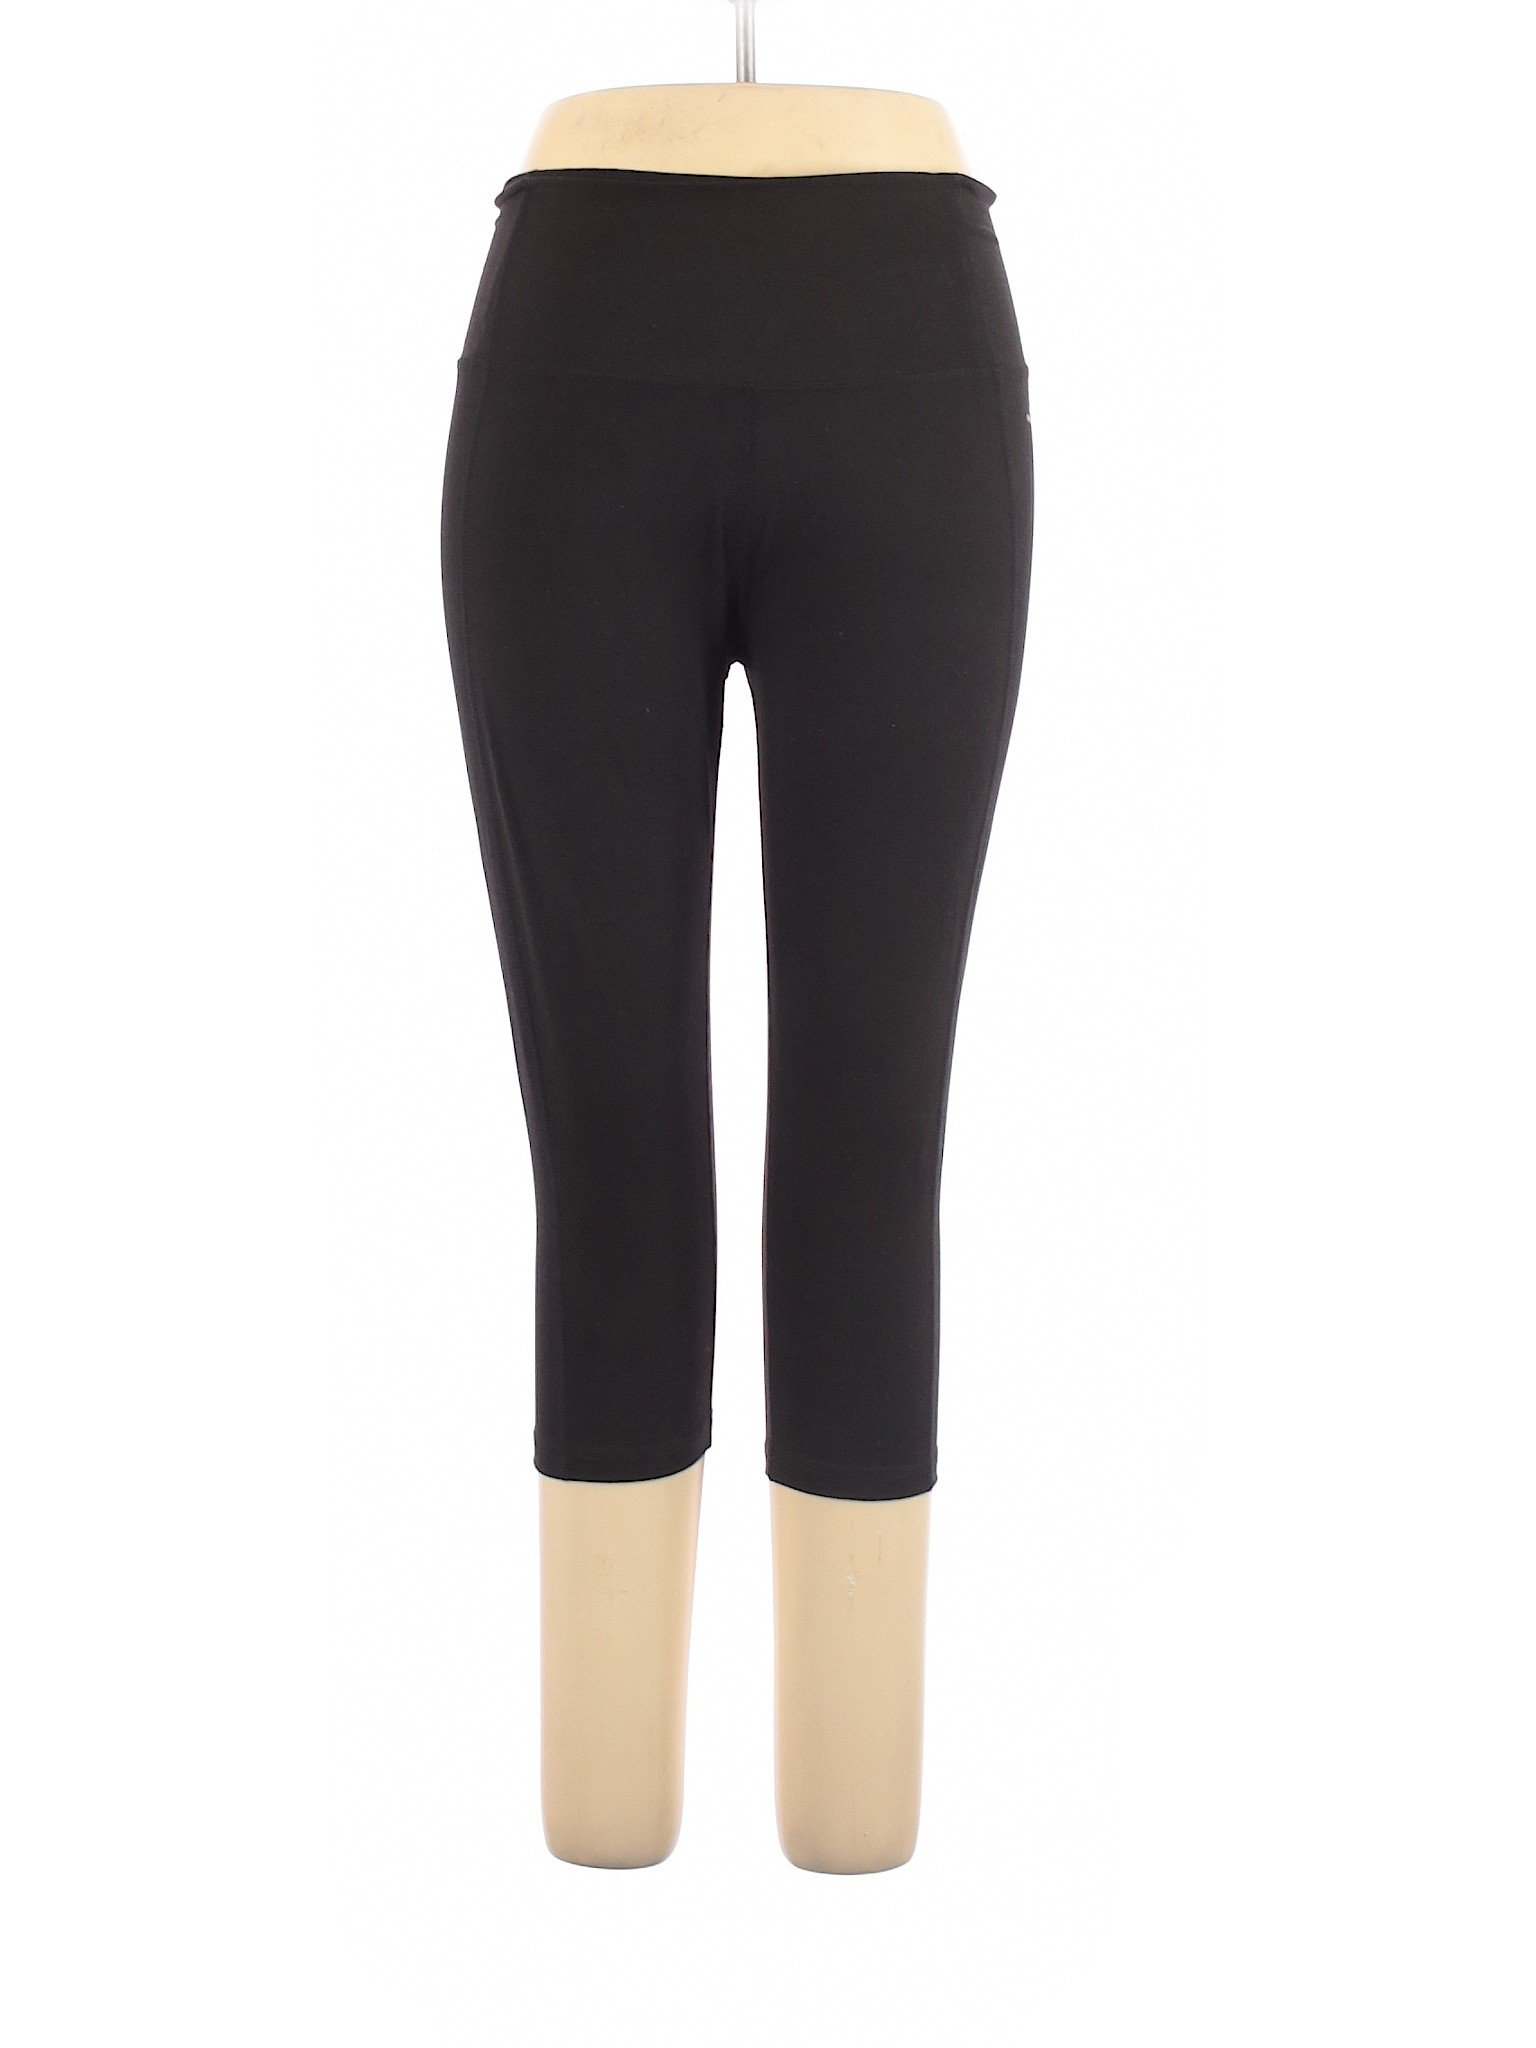 Bcg Solid Black Active Pants Size XL - 55% off | thredUP